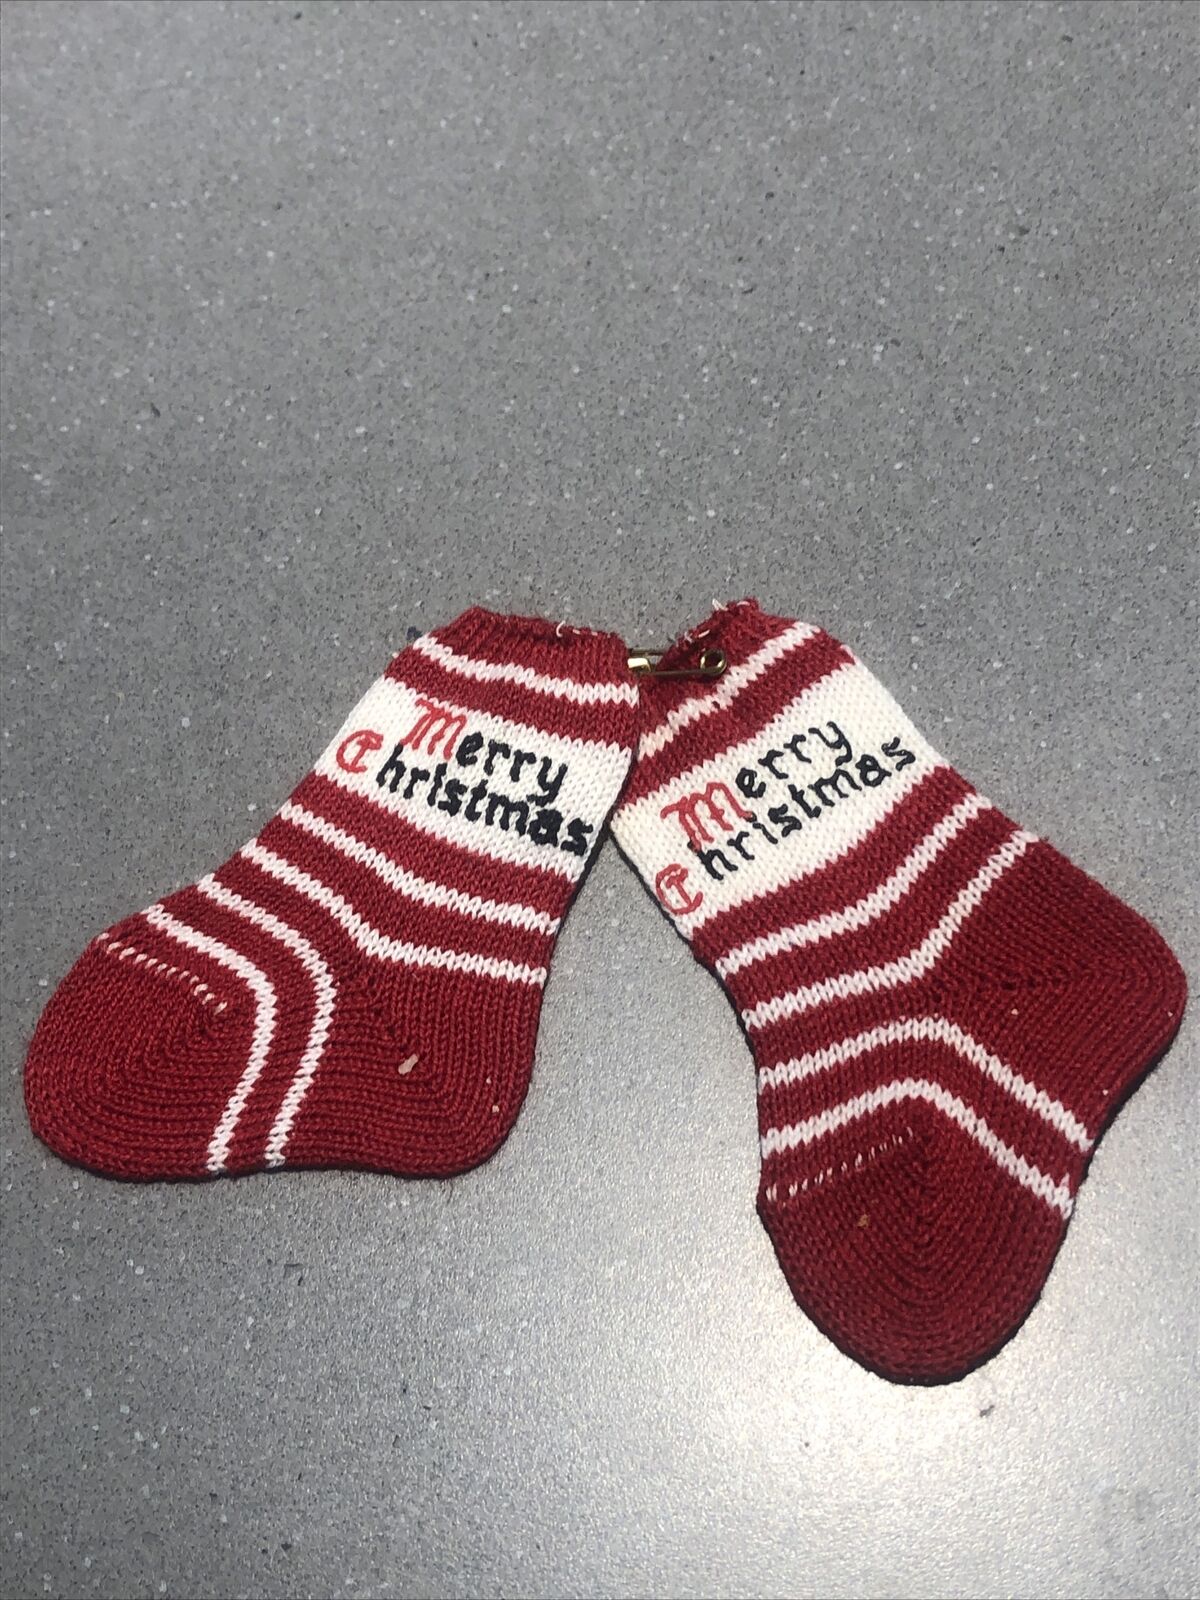 Vintage Miniature Knit Stocking Sock Merry Christmas Ornaments